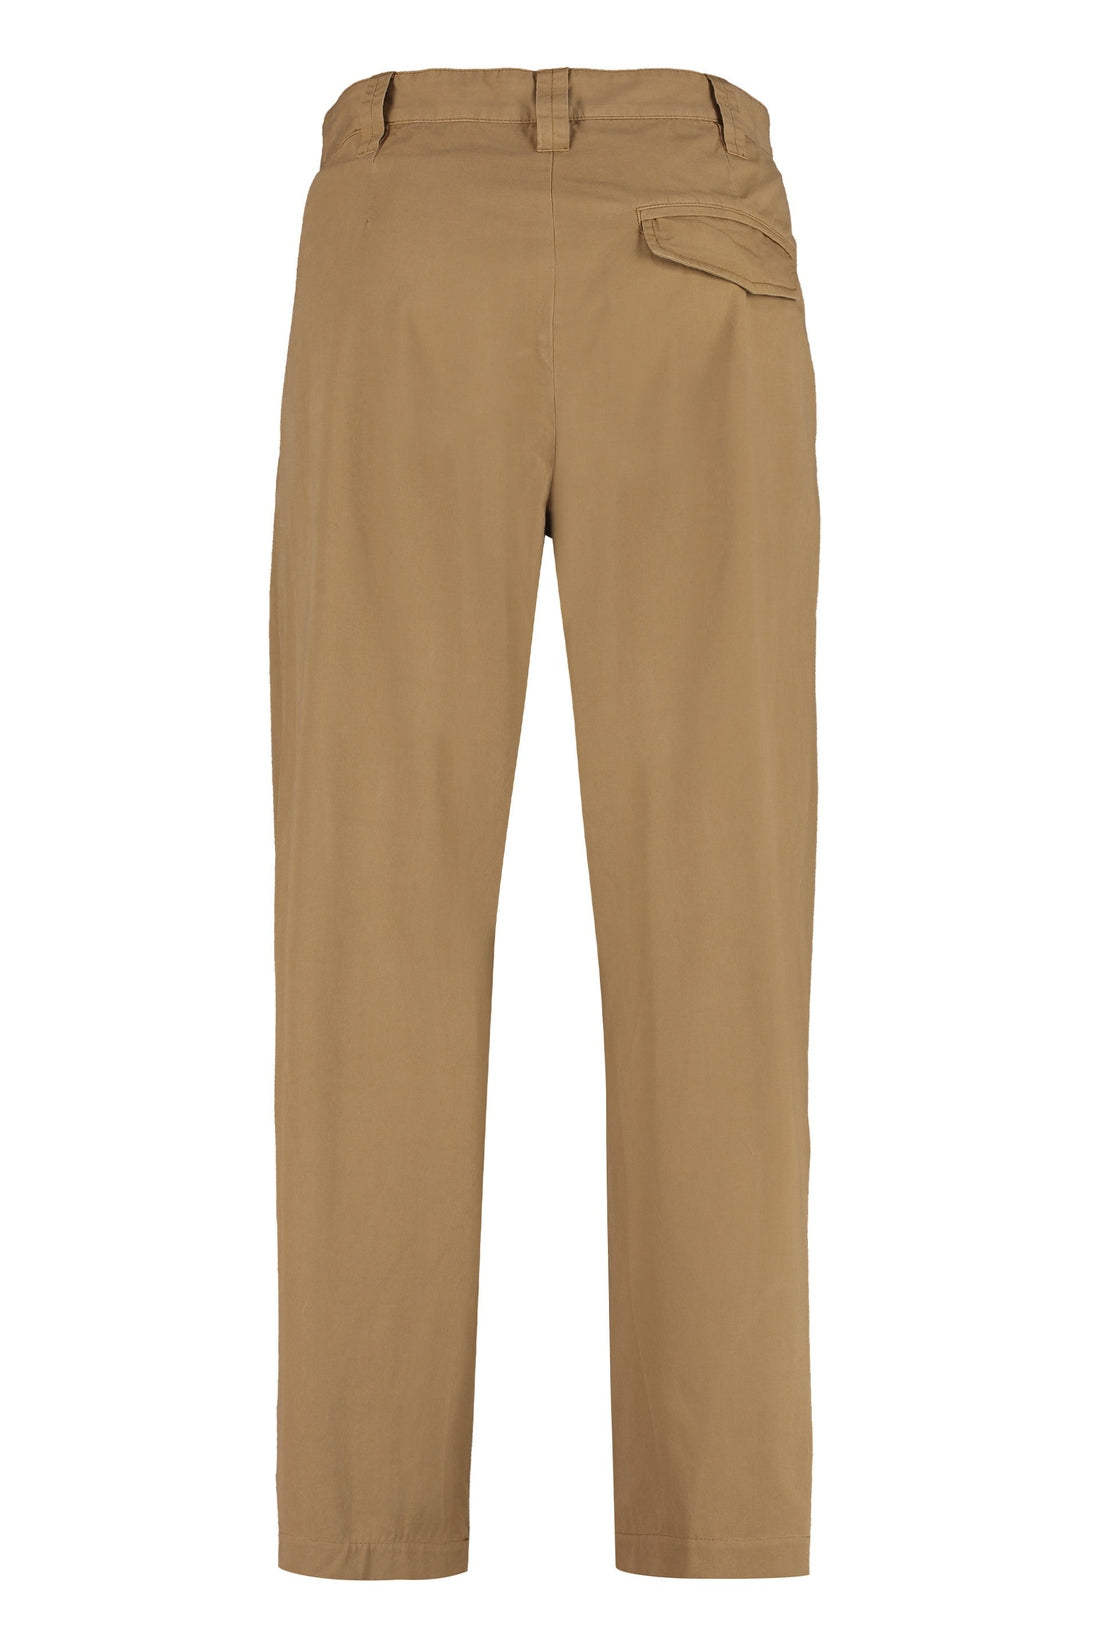 A.P.C.-OUTLET-SALE-Cotton Chino trousers-ARCHIVIST